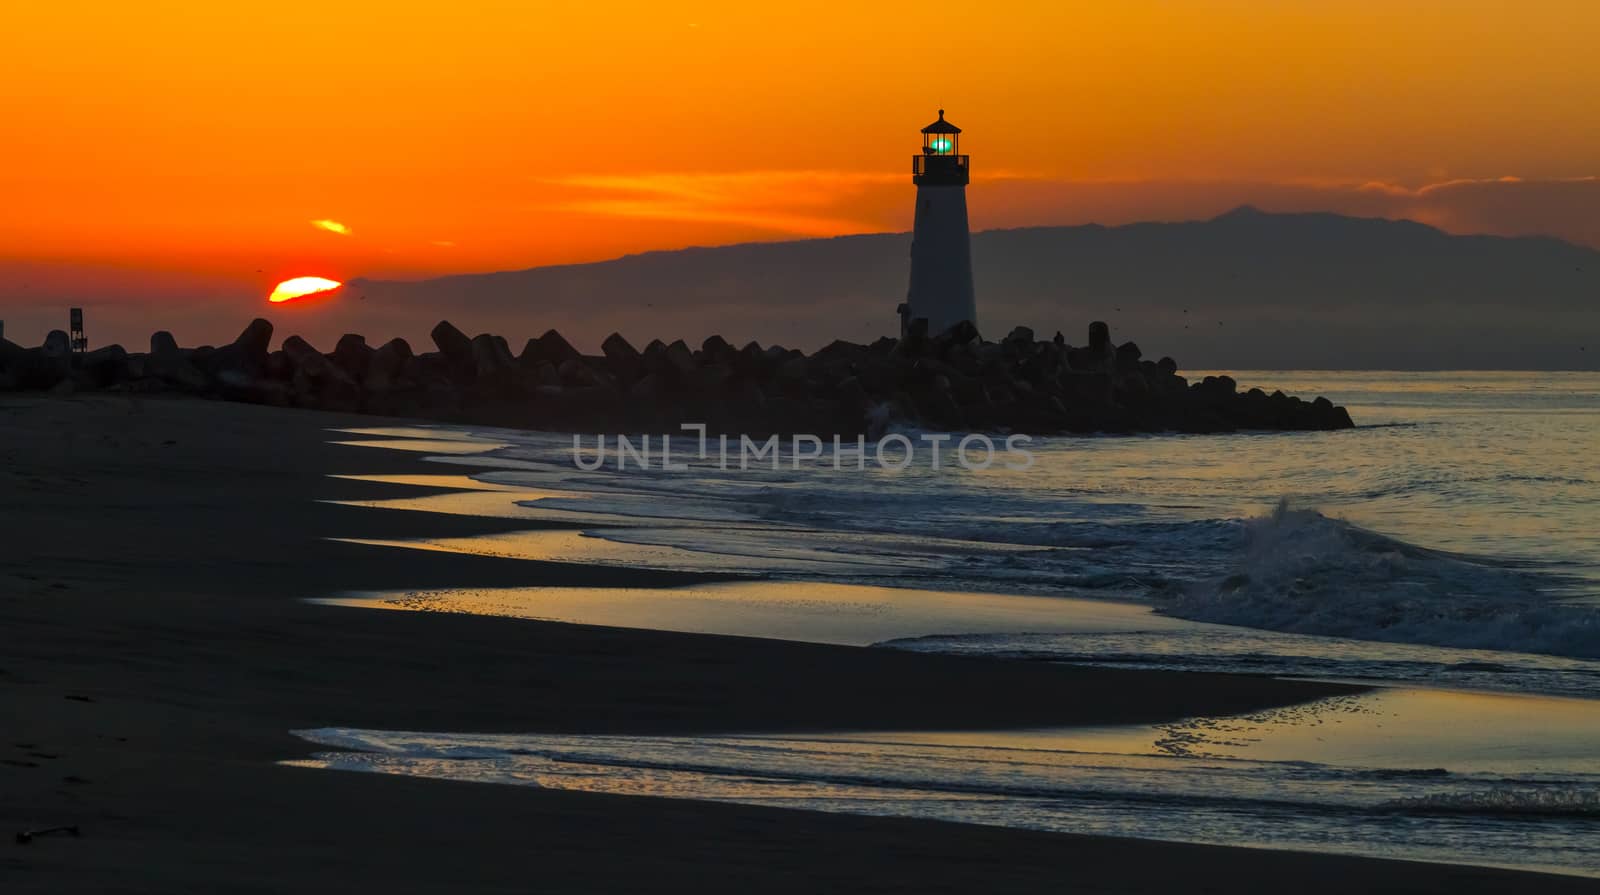 Lighthouse on Santa Cruz Shore by hanusst